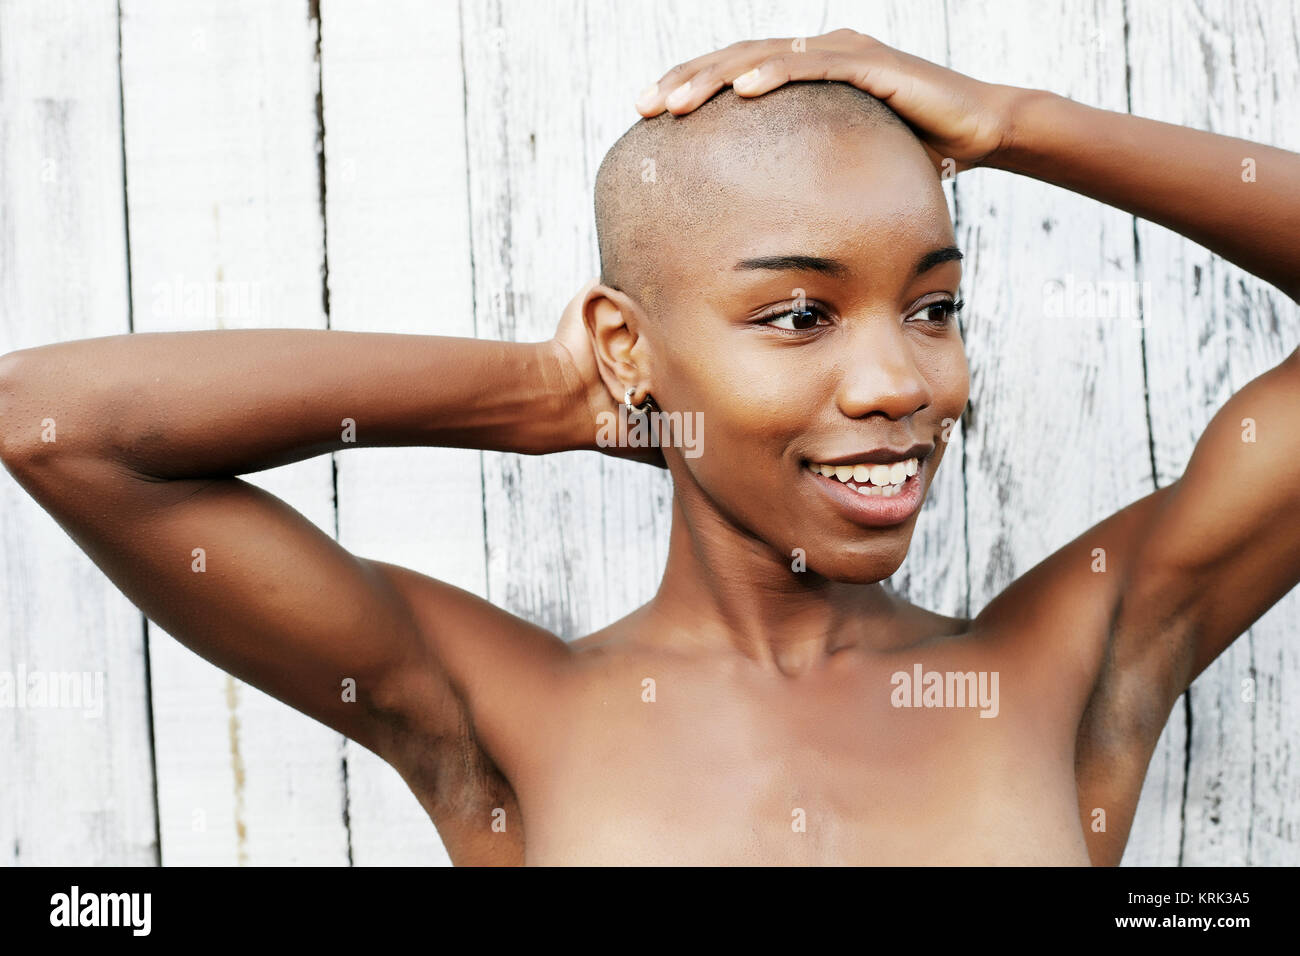 Close up of nude black woman rubbing bald head Banque D'Images